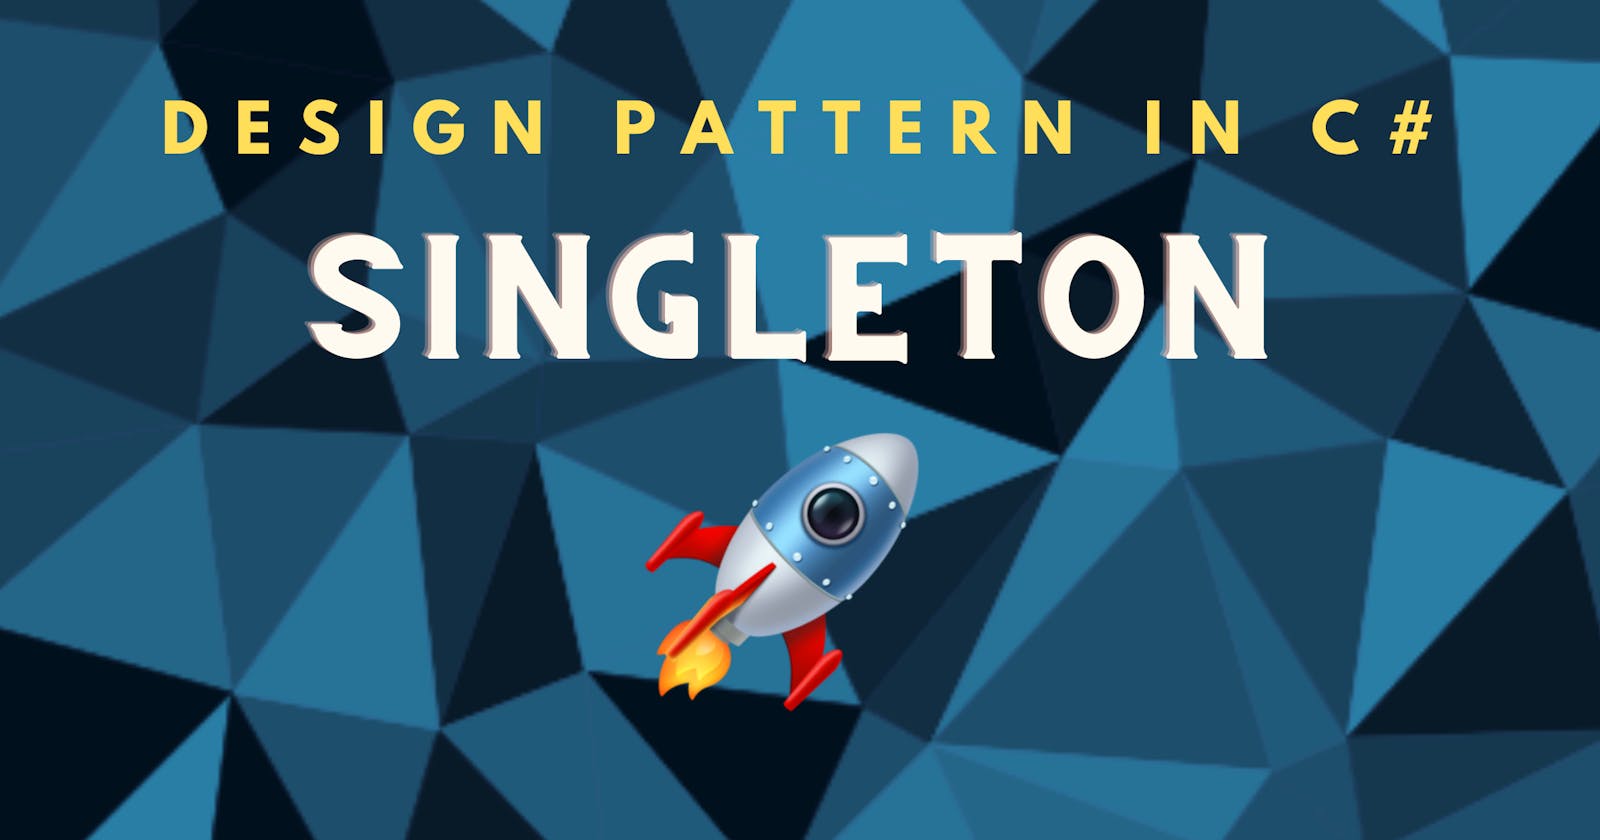 Design Patterns in C# - Singleton